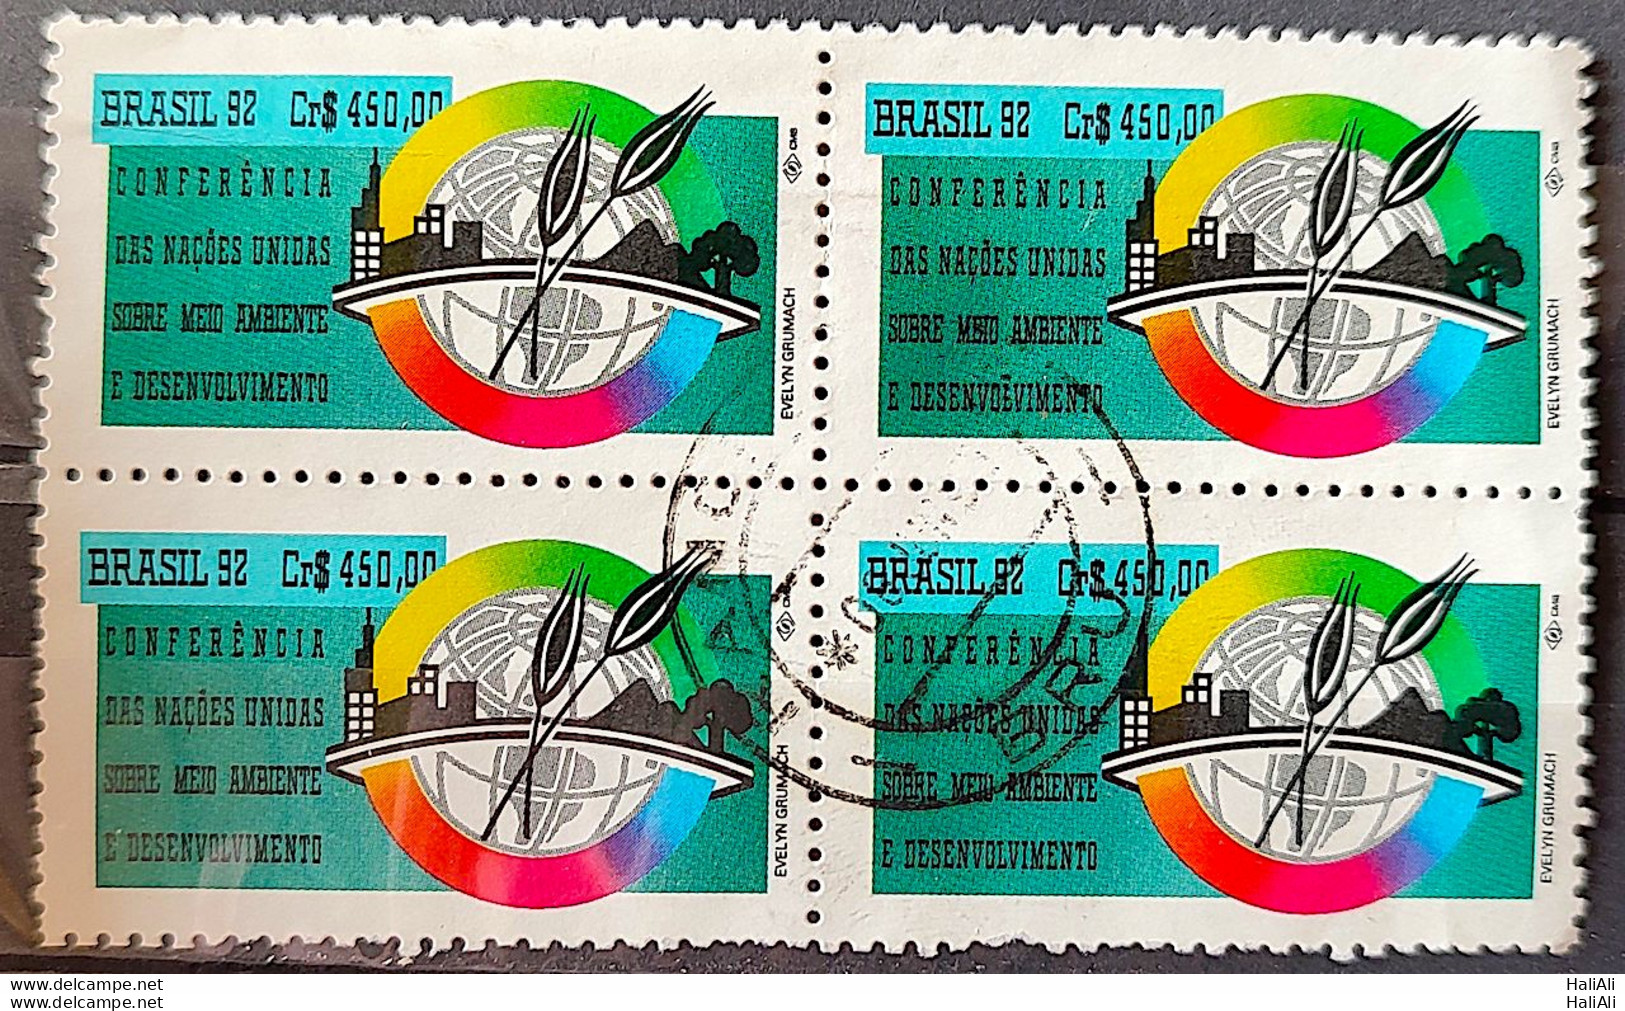 C 1799 Brazil Stamp Conference Eco 92 Rio De Janeiro Environment 1992 Block Of 4 Circulated 1 - Gebraucht